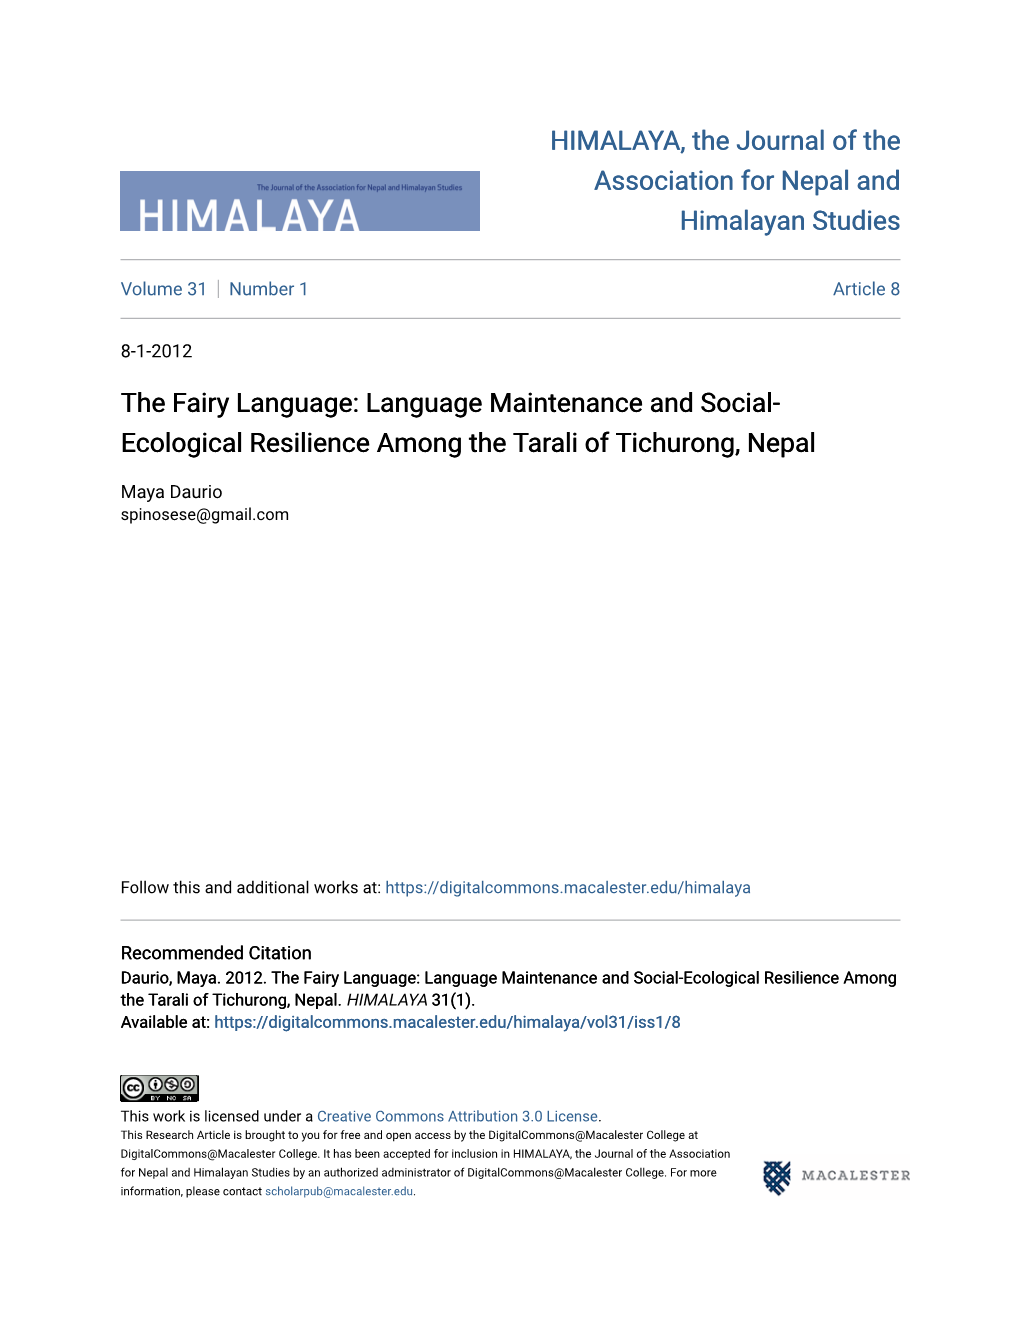 Language Maintenance and Social-Ecological Resilience Among the Tarali of Tichurong, Nepal